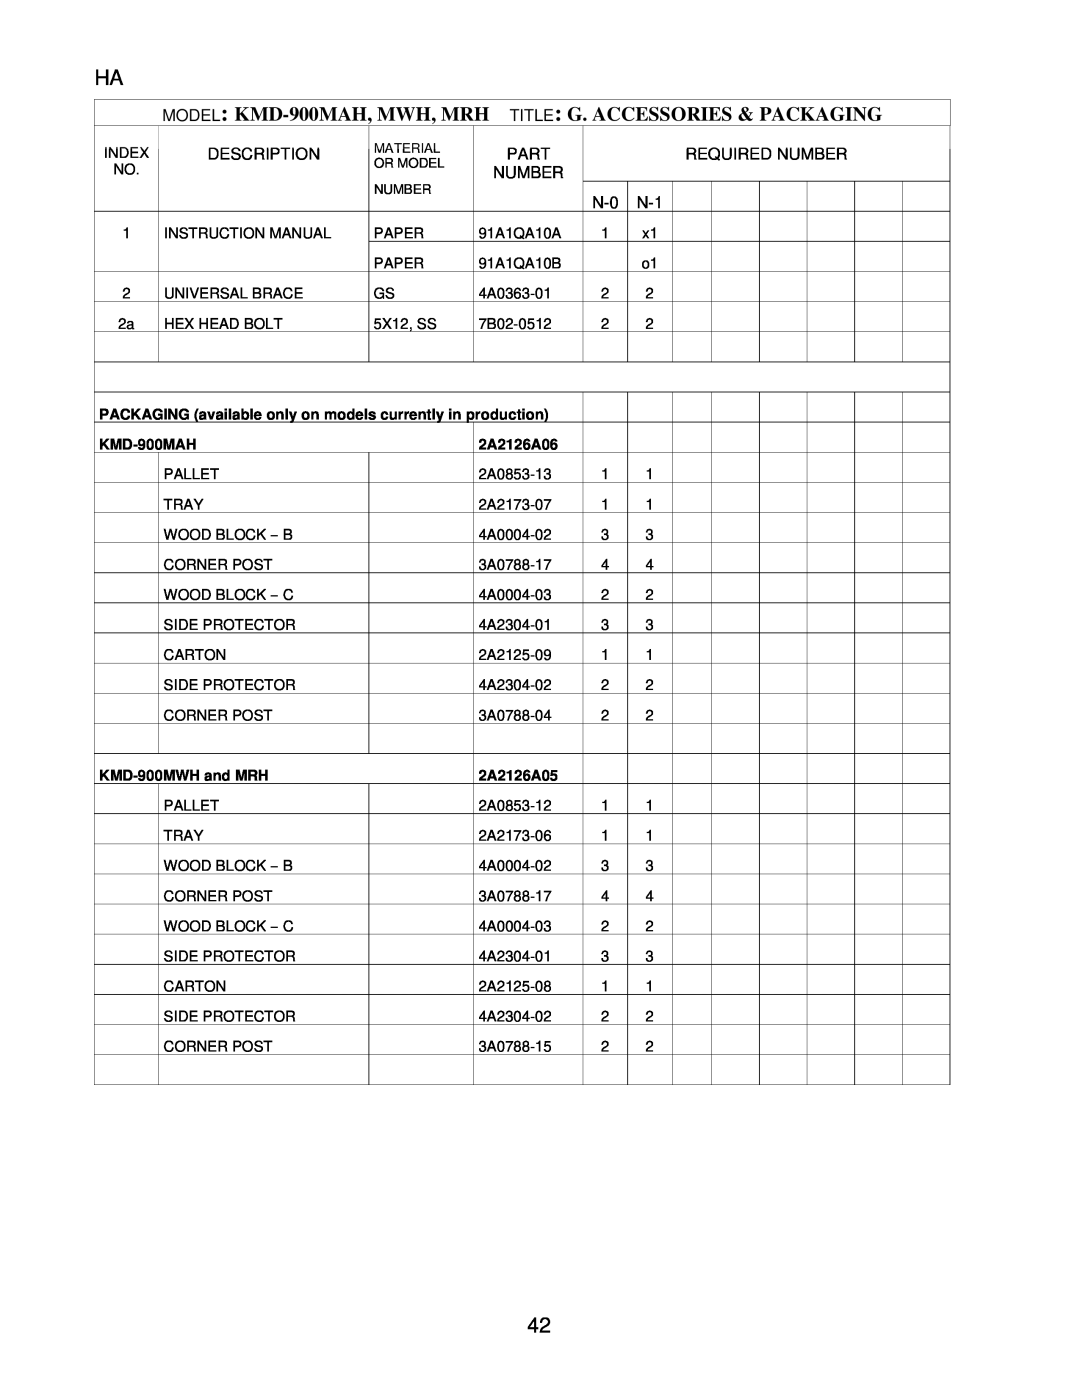 Hoshizaki manual MODEL KMD-900MAH, MWH, MRH TITLE G. ACCESSORIES & PACKAGING, 2A2126A06, KMD-900MWH and MRH, 2A2126A05 